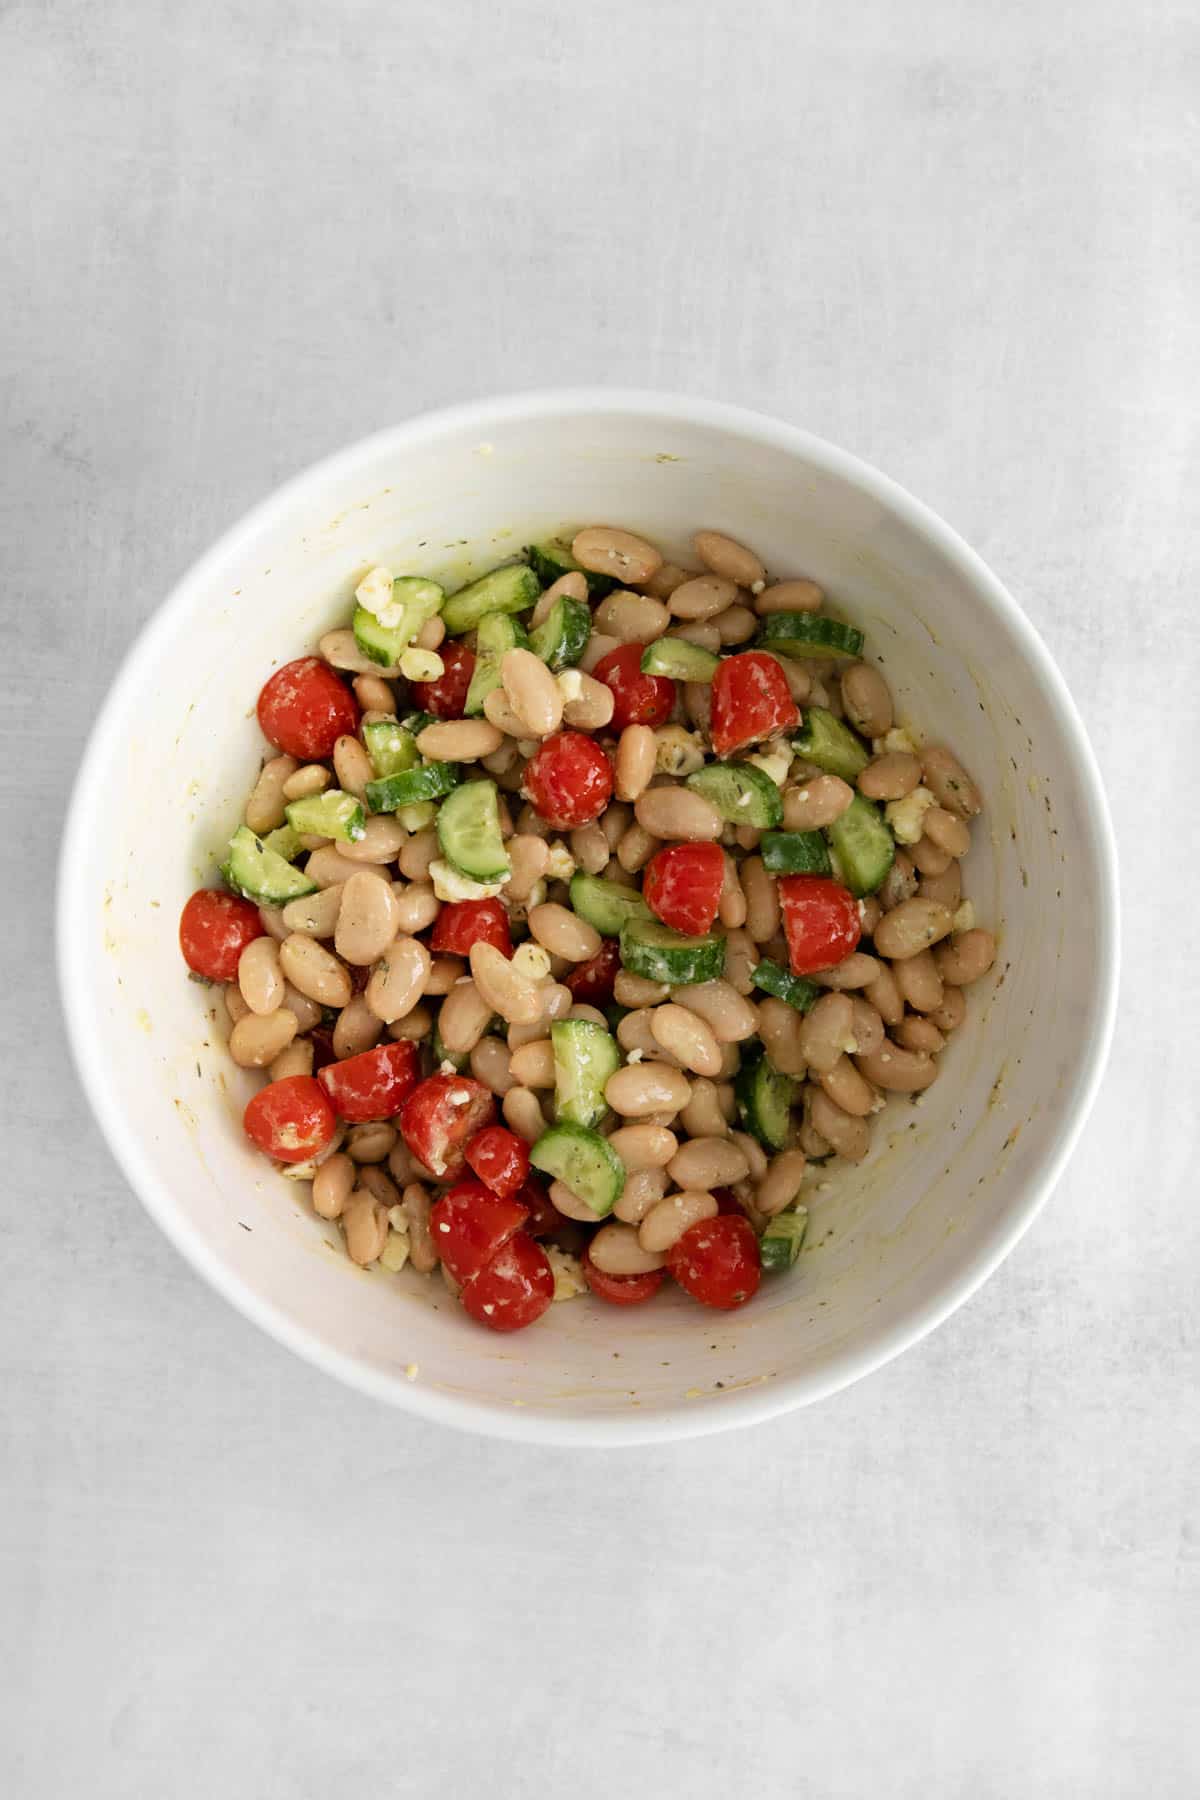 Mixed Mediterranean white bean salad ingredients in a bowl.